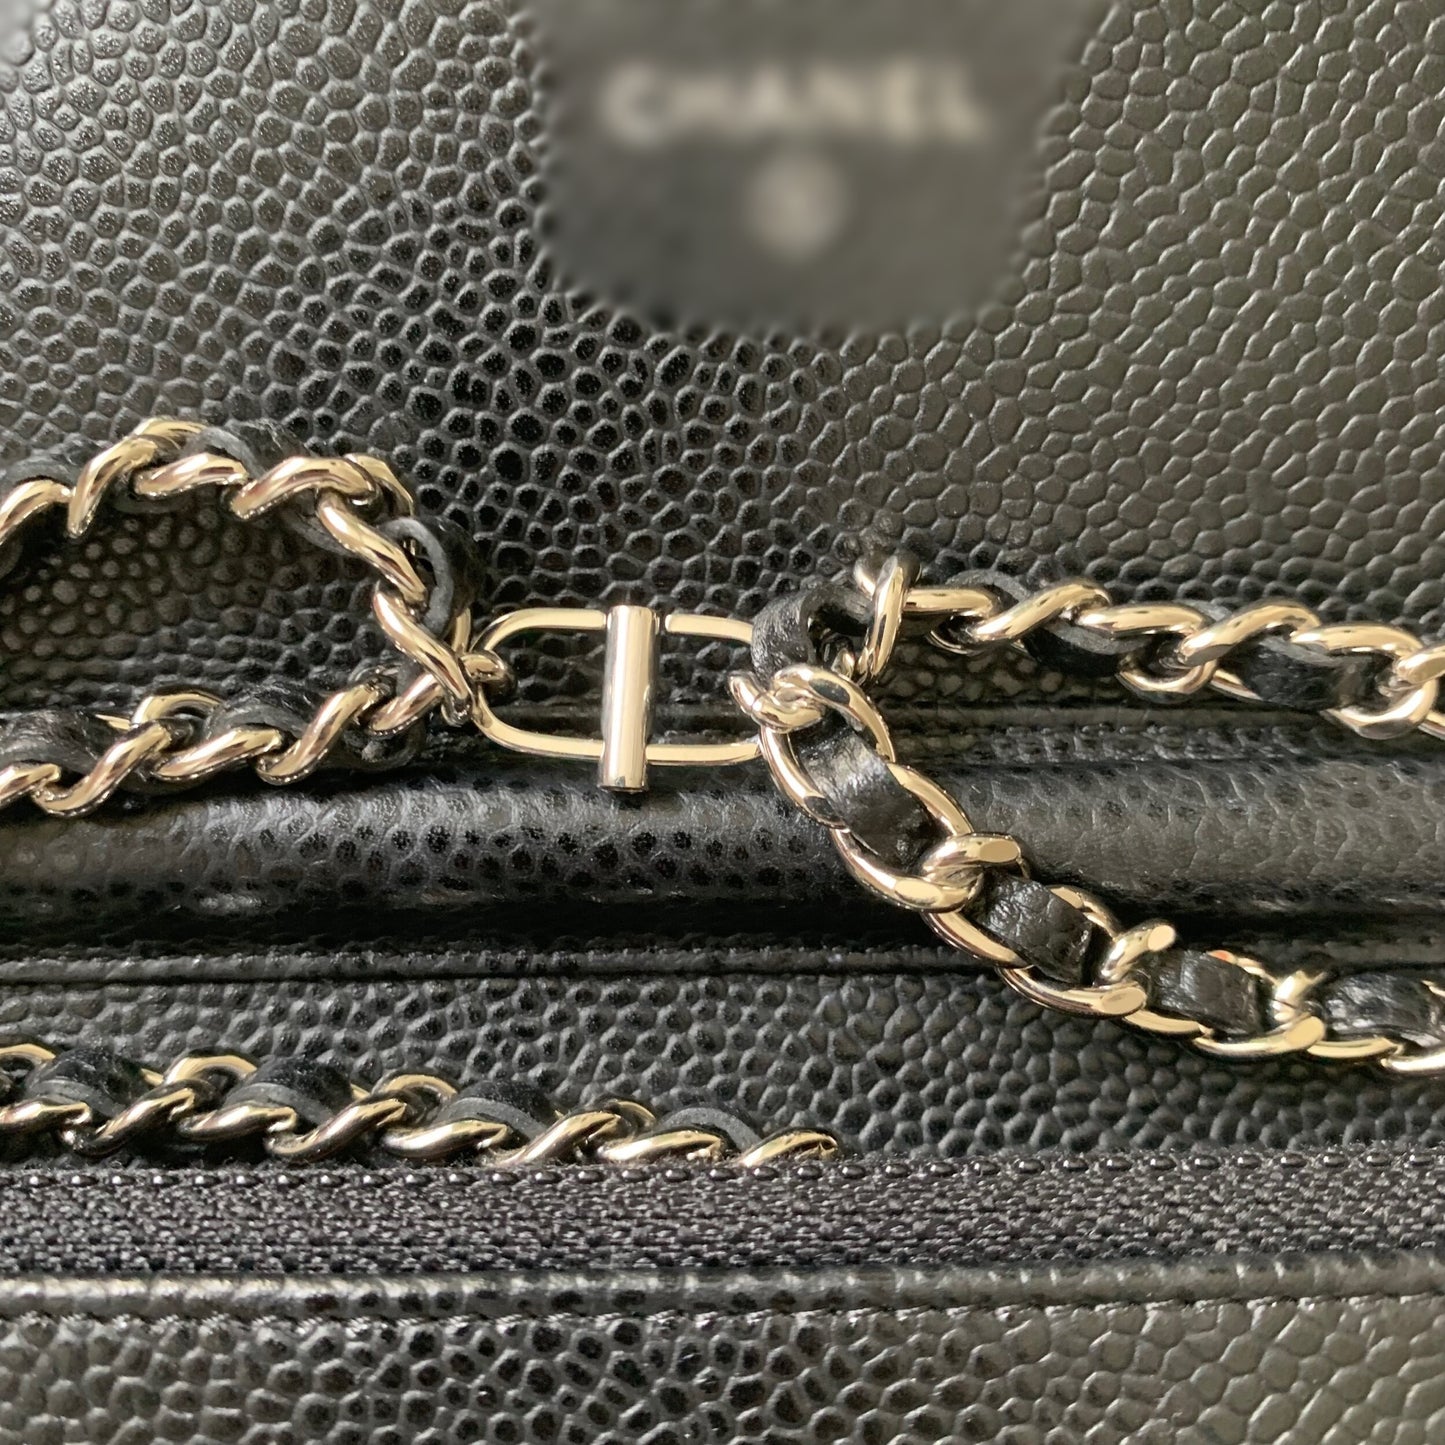 WOC's chain length adjustment clip